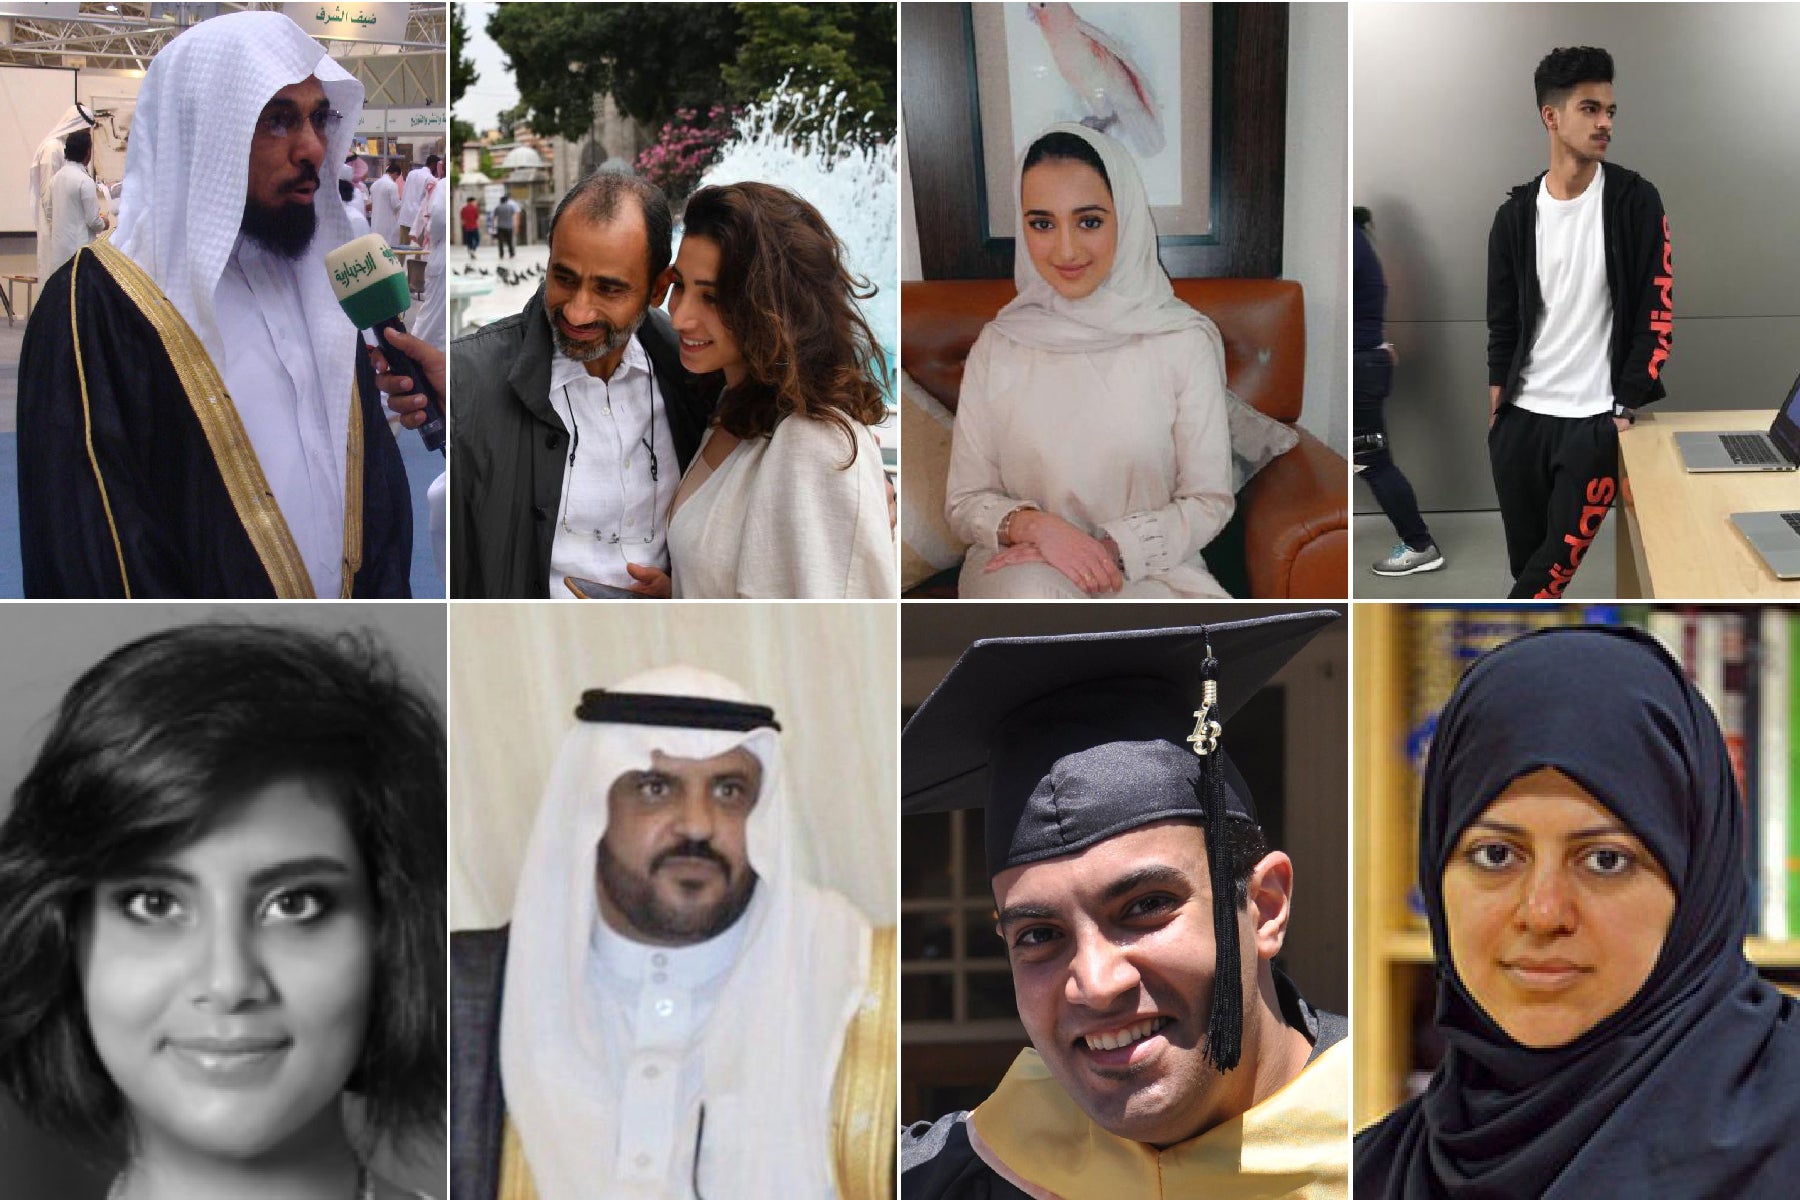 Top, left to right: Salman Al-Awda, Dr. Walid Fitaihi and his daughter, Sarah Jabri, and Omar Jabri. Bottom, left to right: Loujain al-Hathloul, Mohammed al-Otaibi, Abdelrahman al-Sadhan, and Nassima al-Sadah.